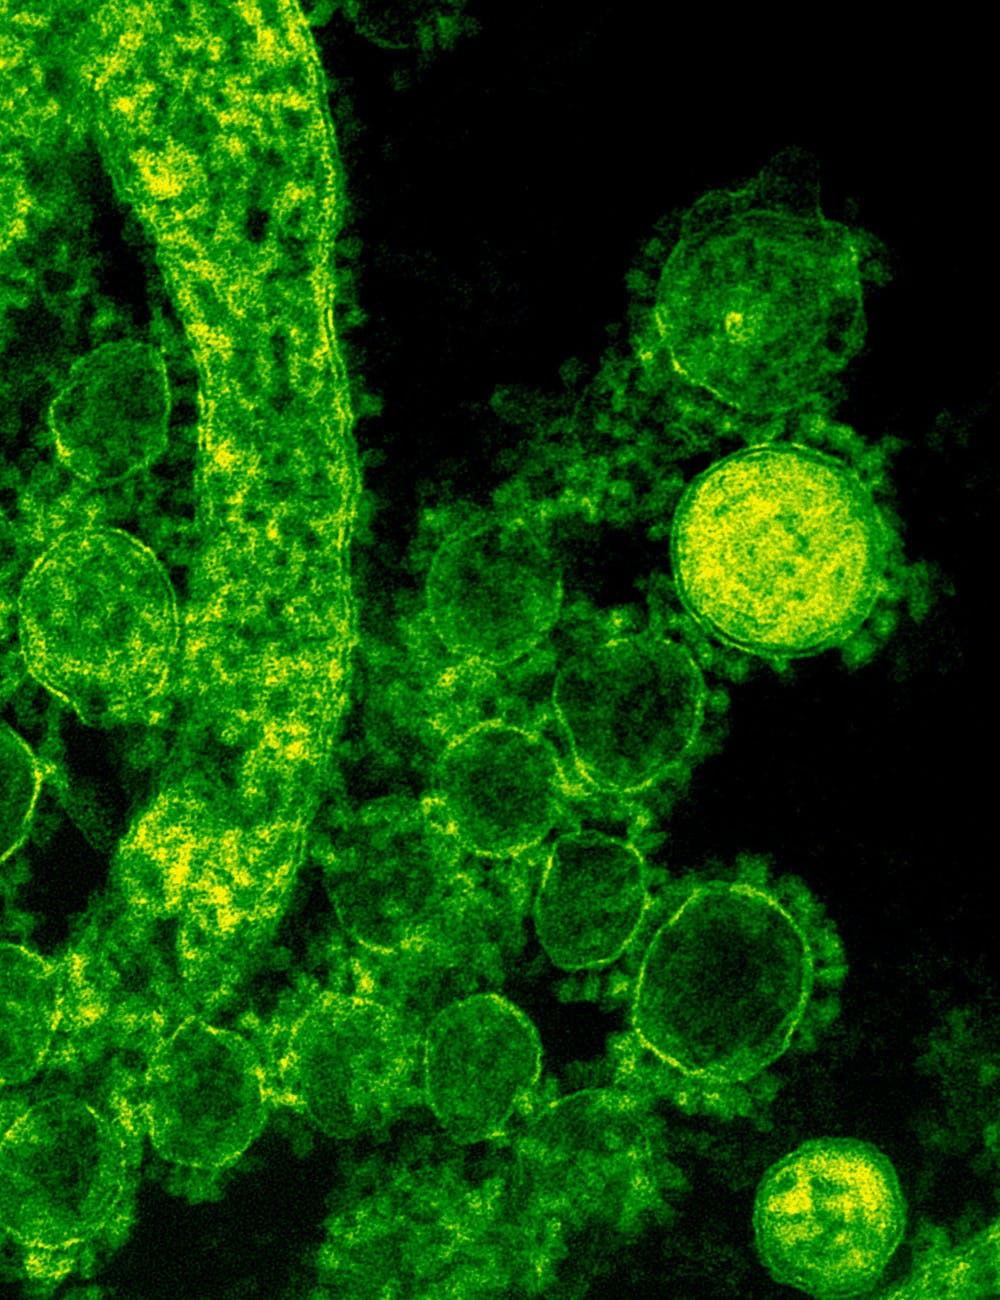 CRISPR/Cas – Bacteria’s impressive immunity system